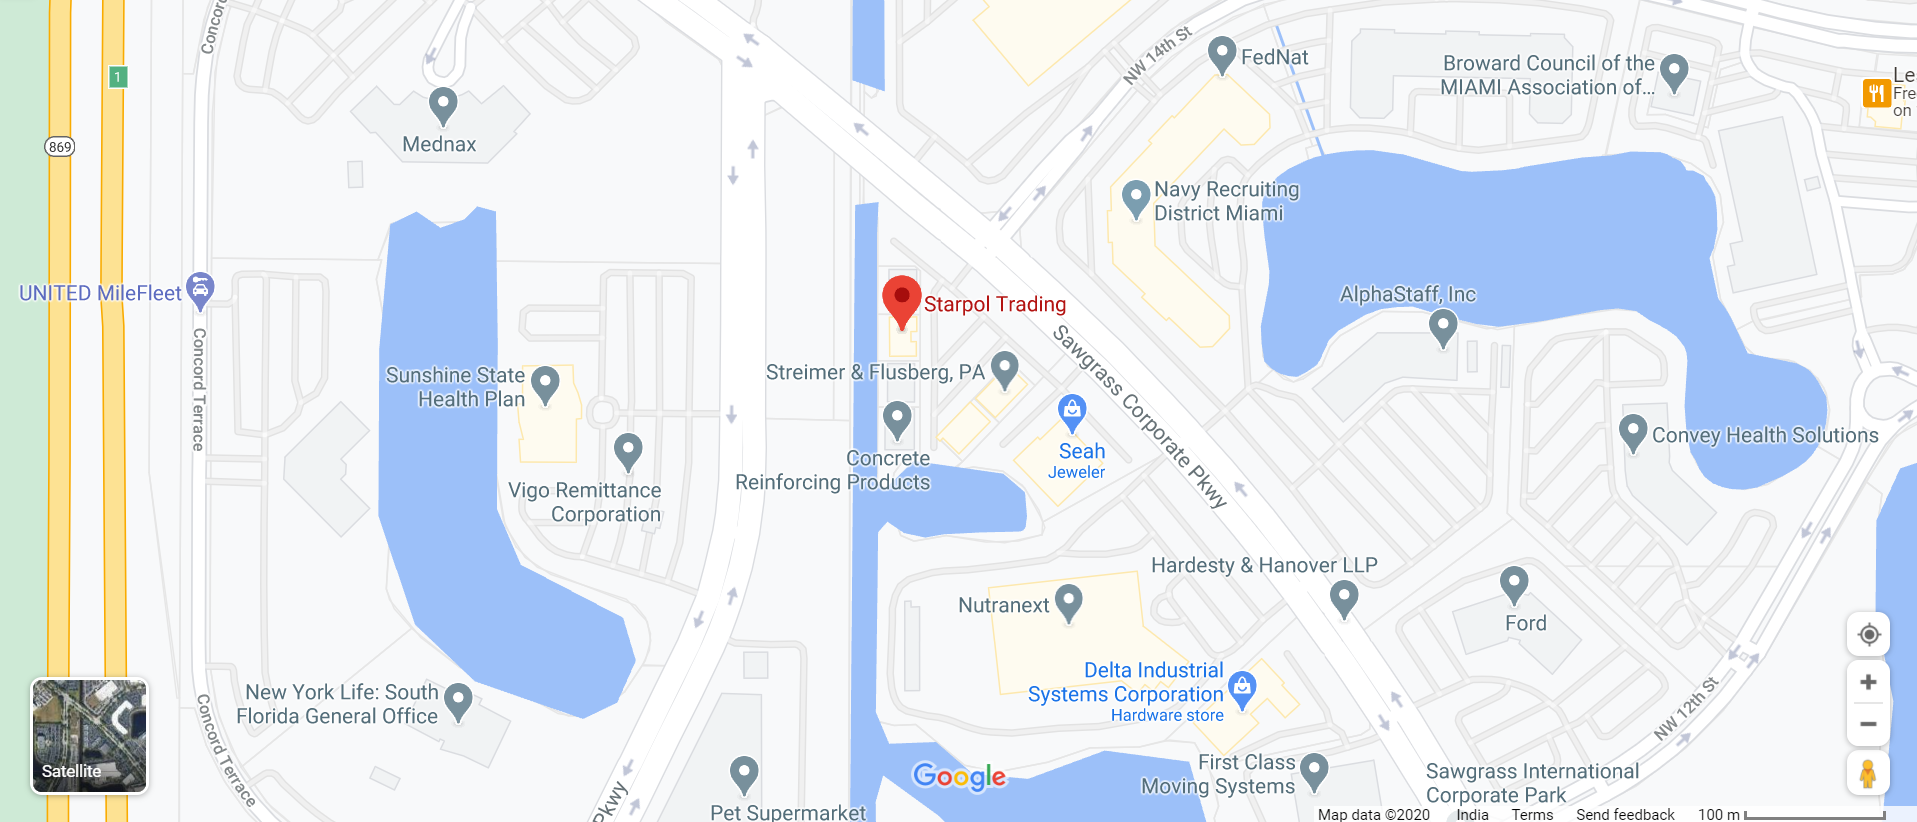 Starpol-Trading-Google-Maps